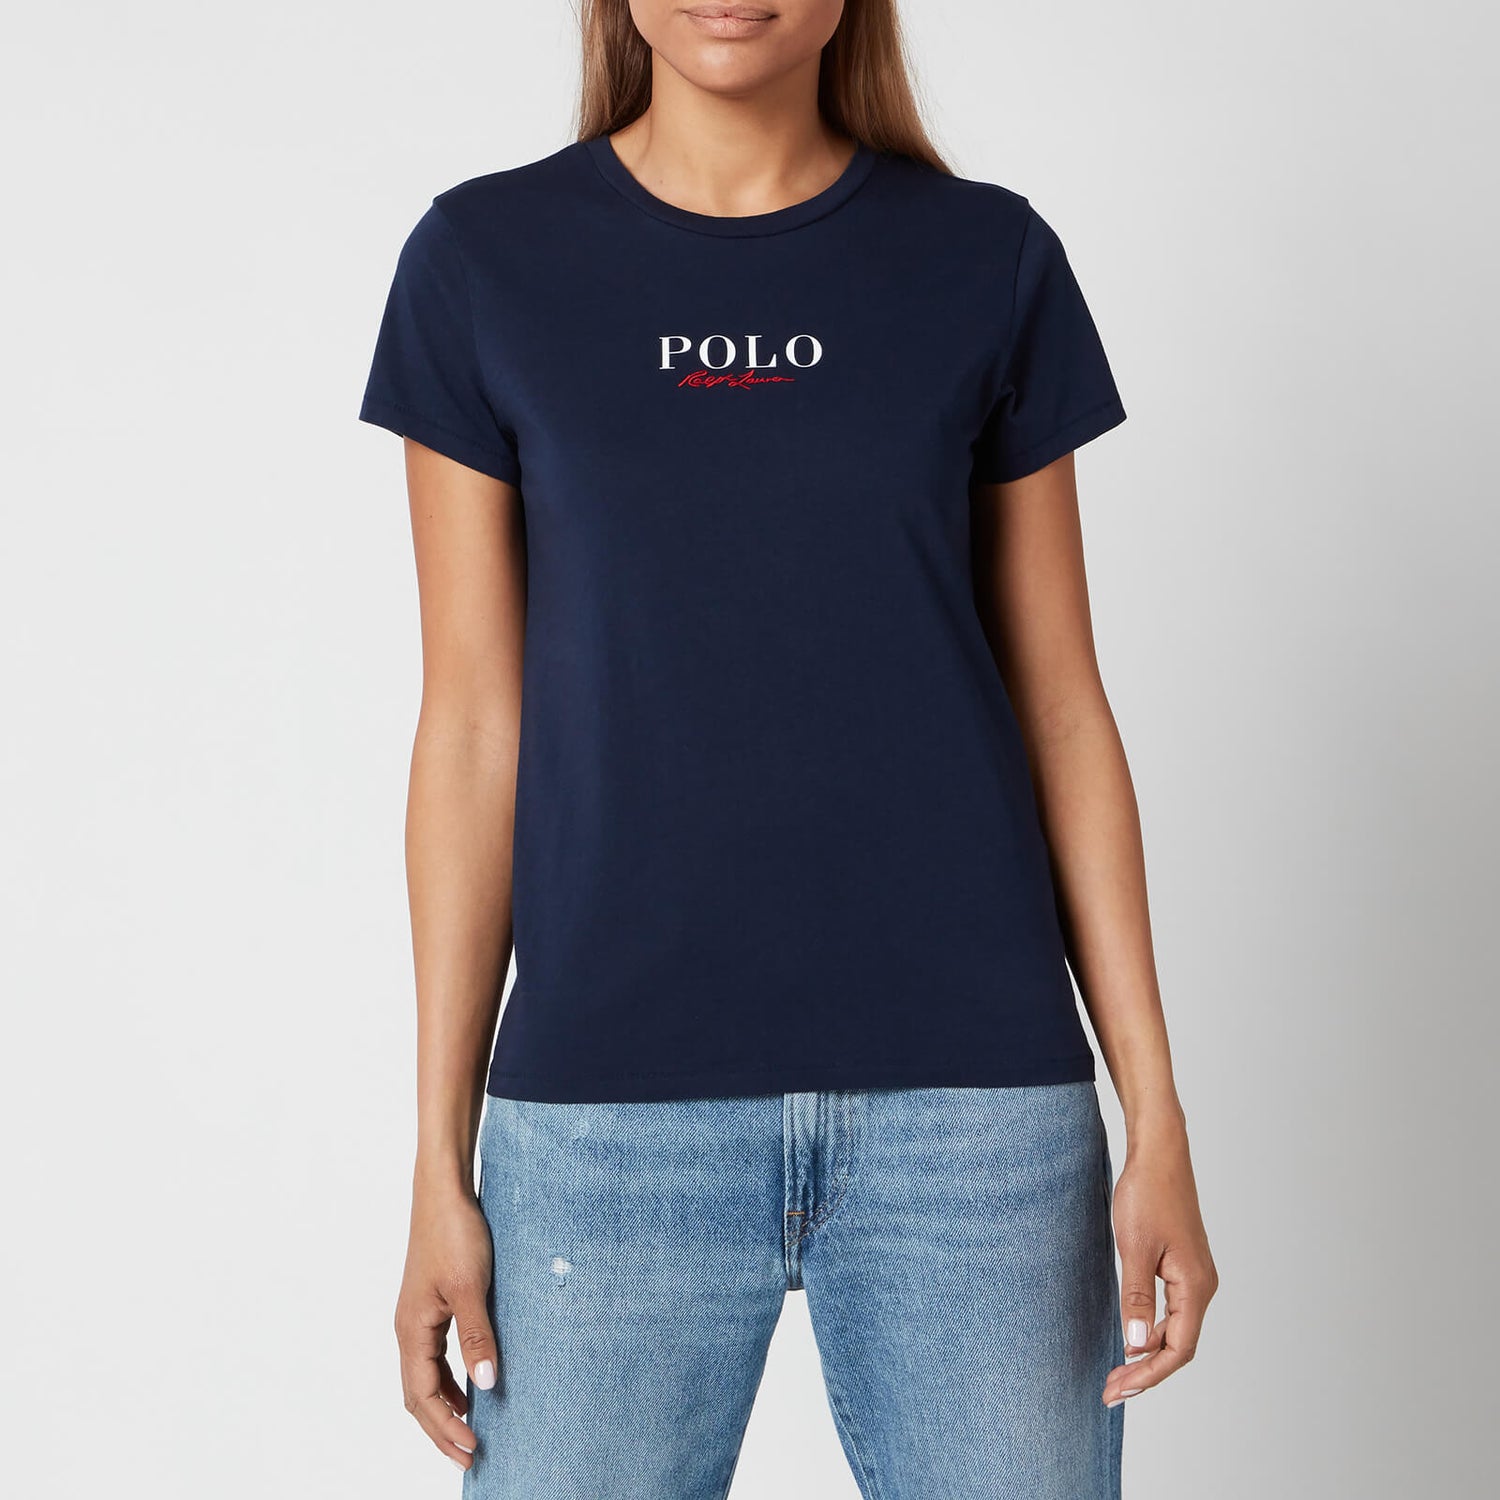 Polo Ralph Lauren Women's Small Logo Polo T-Shirt - Cruise Navy - Free ...